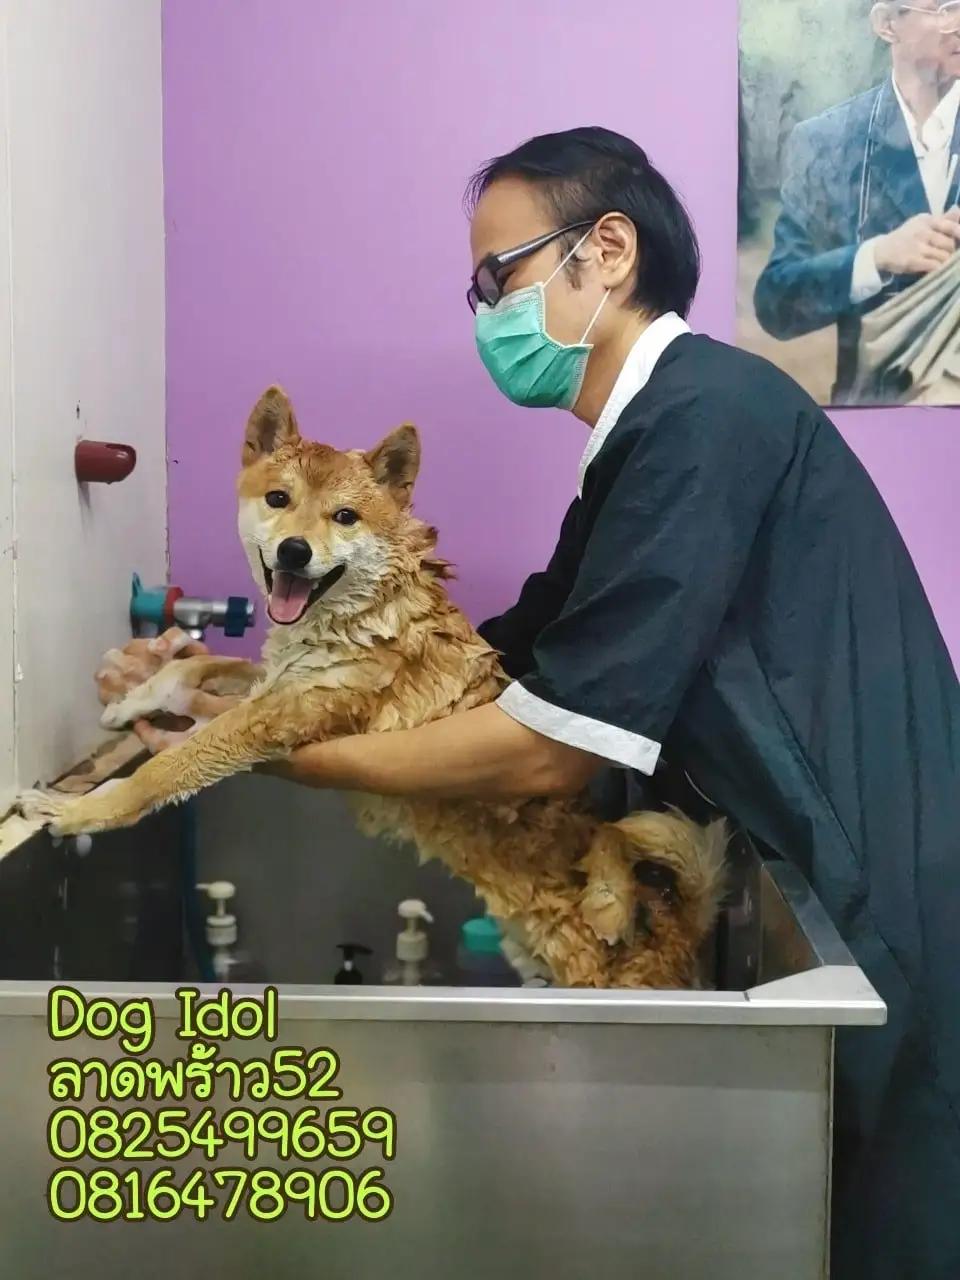 Dog Idol อาบน้ำตัดขน ลาดพร้าว 52